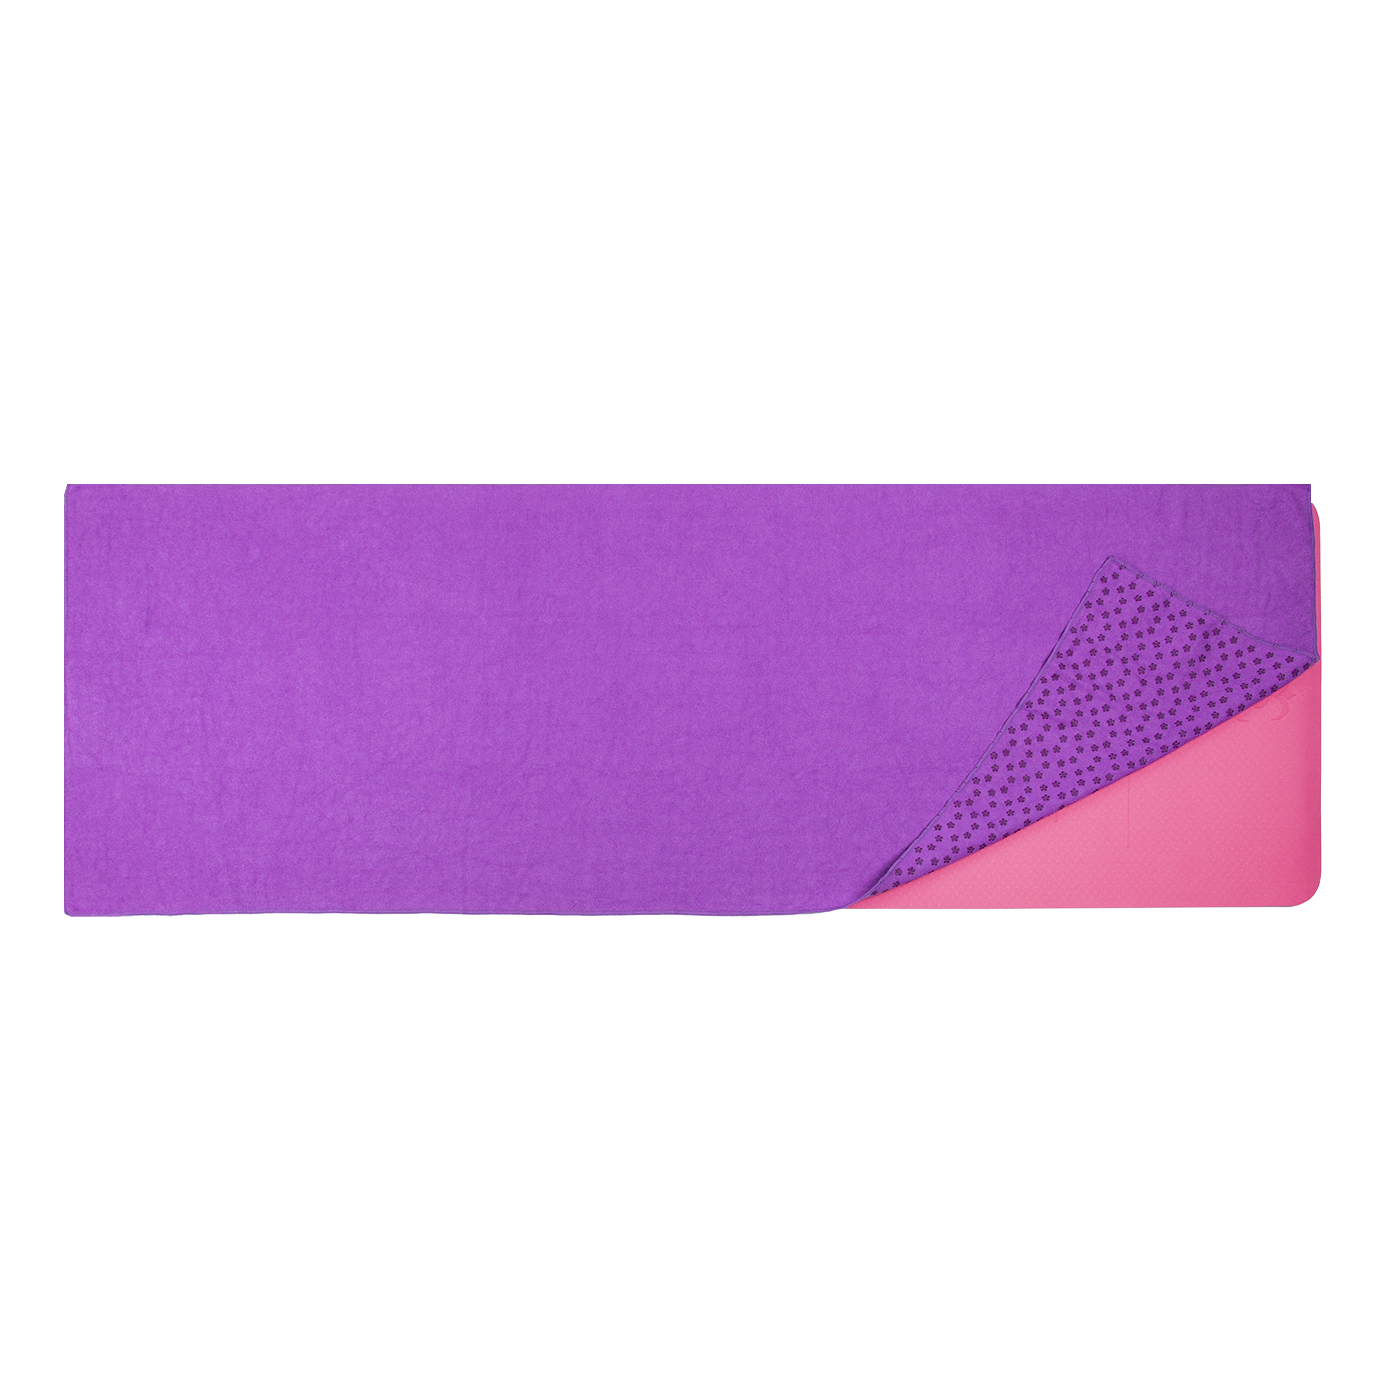 Microfiber Yoga Towel With Grip Dot2